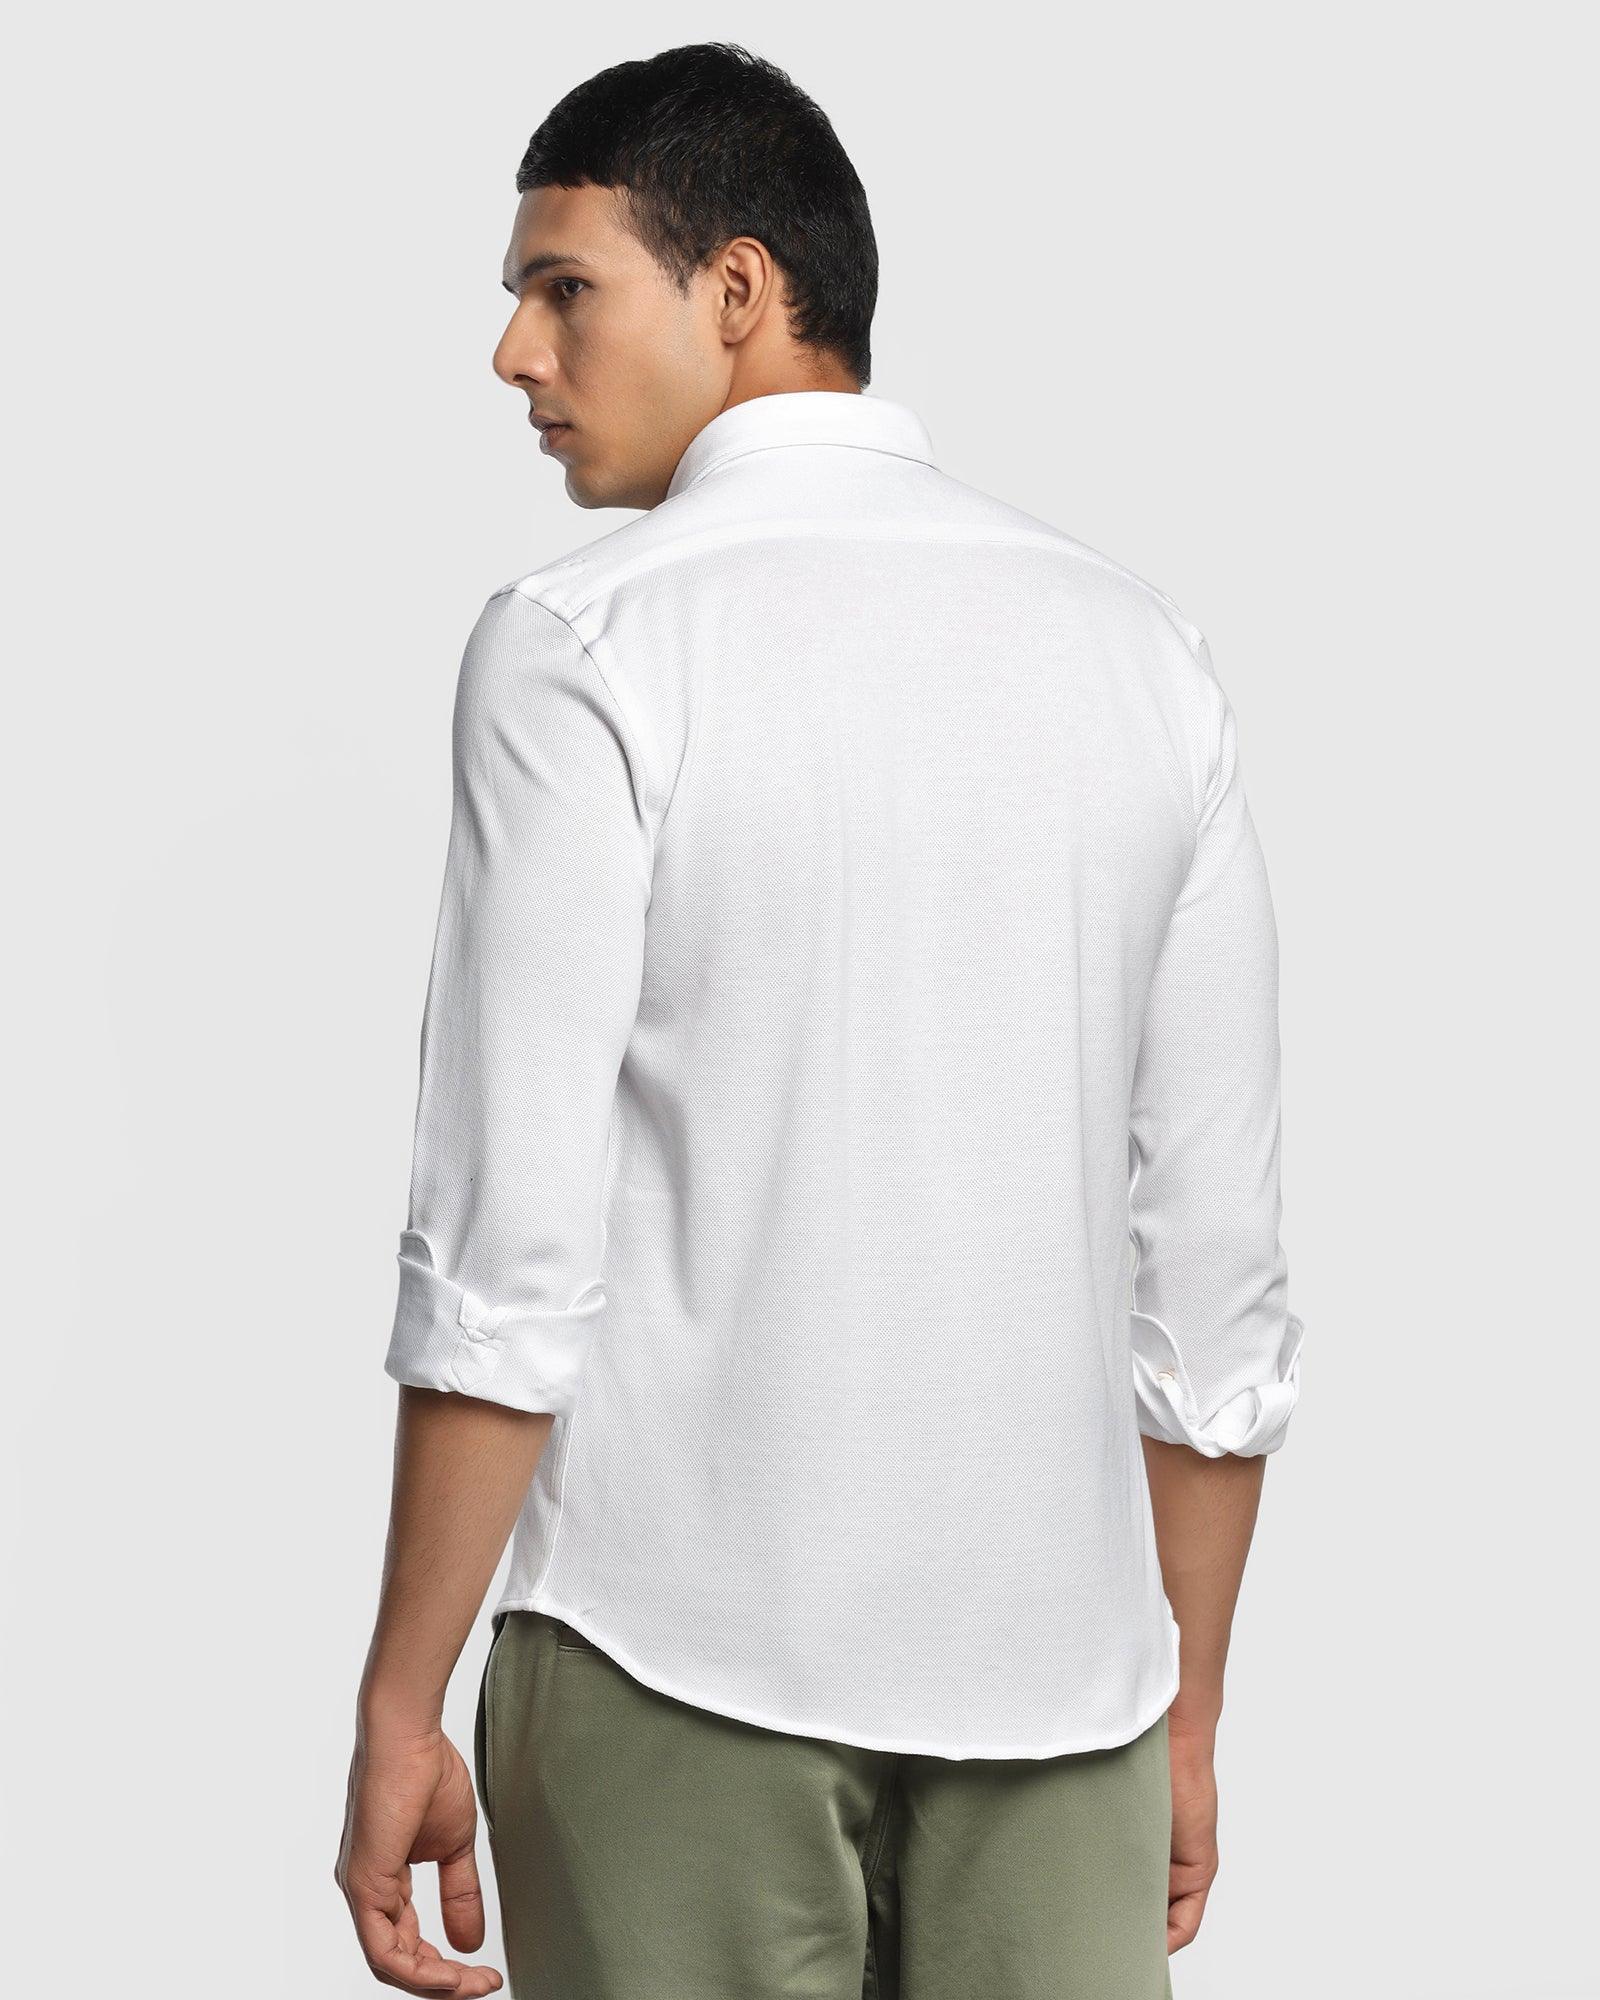 Casual White Solid Shirt - Nico